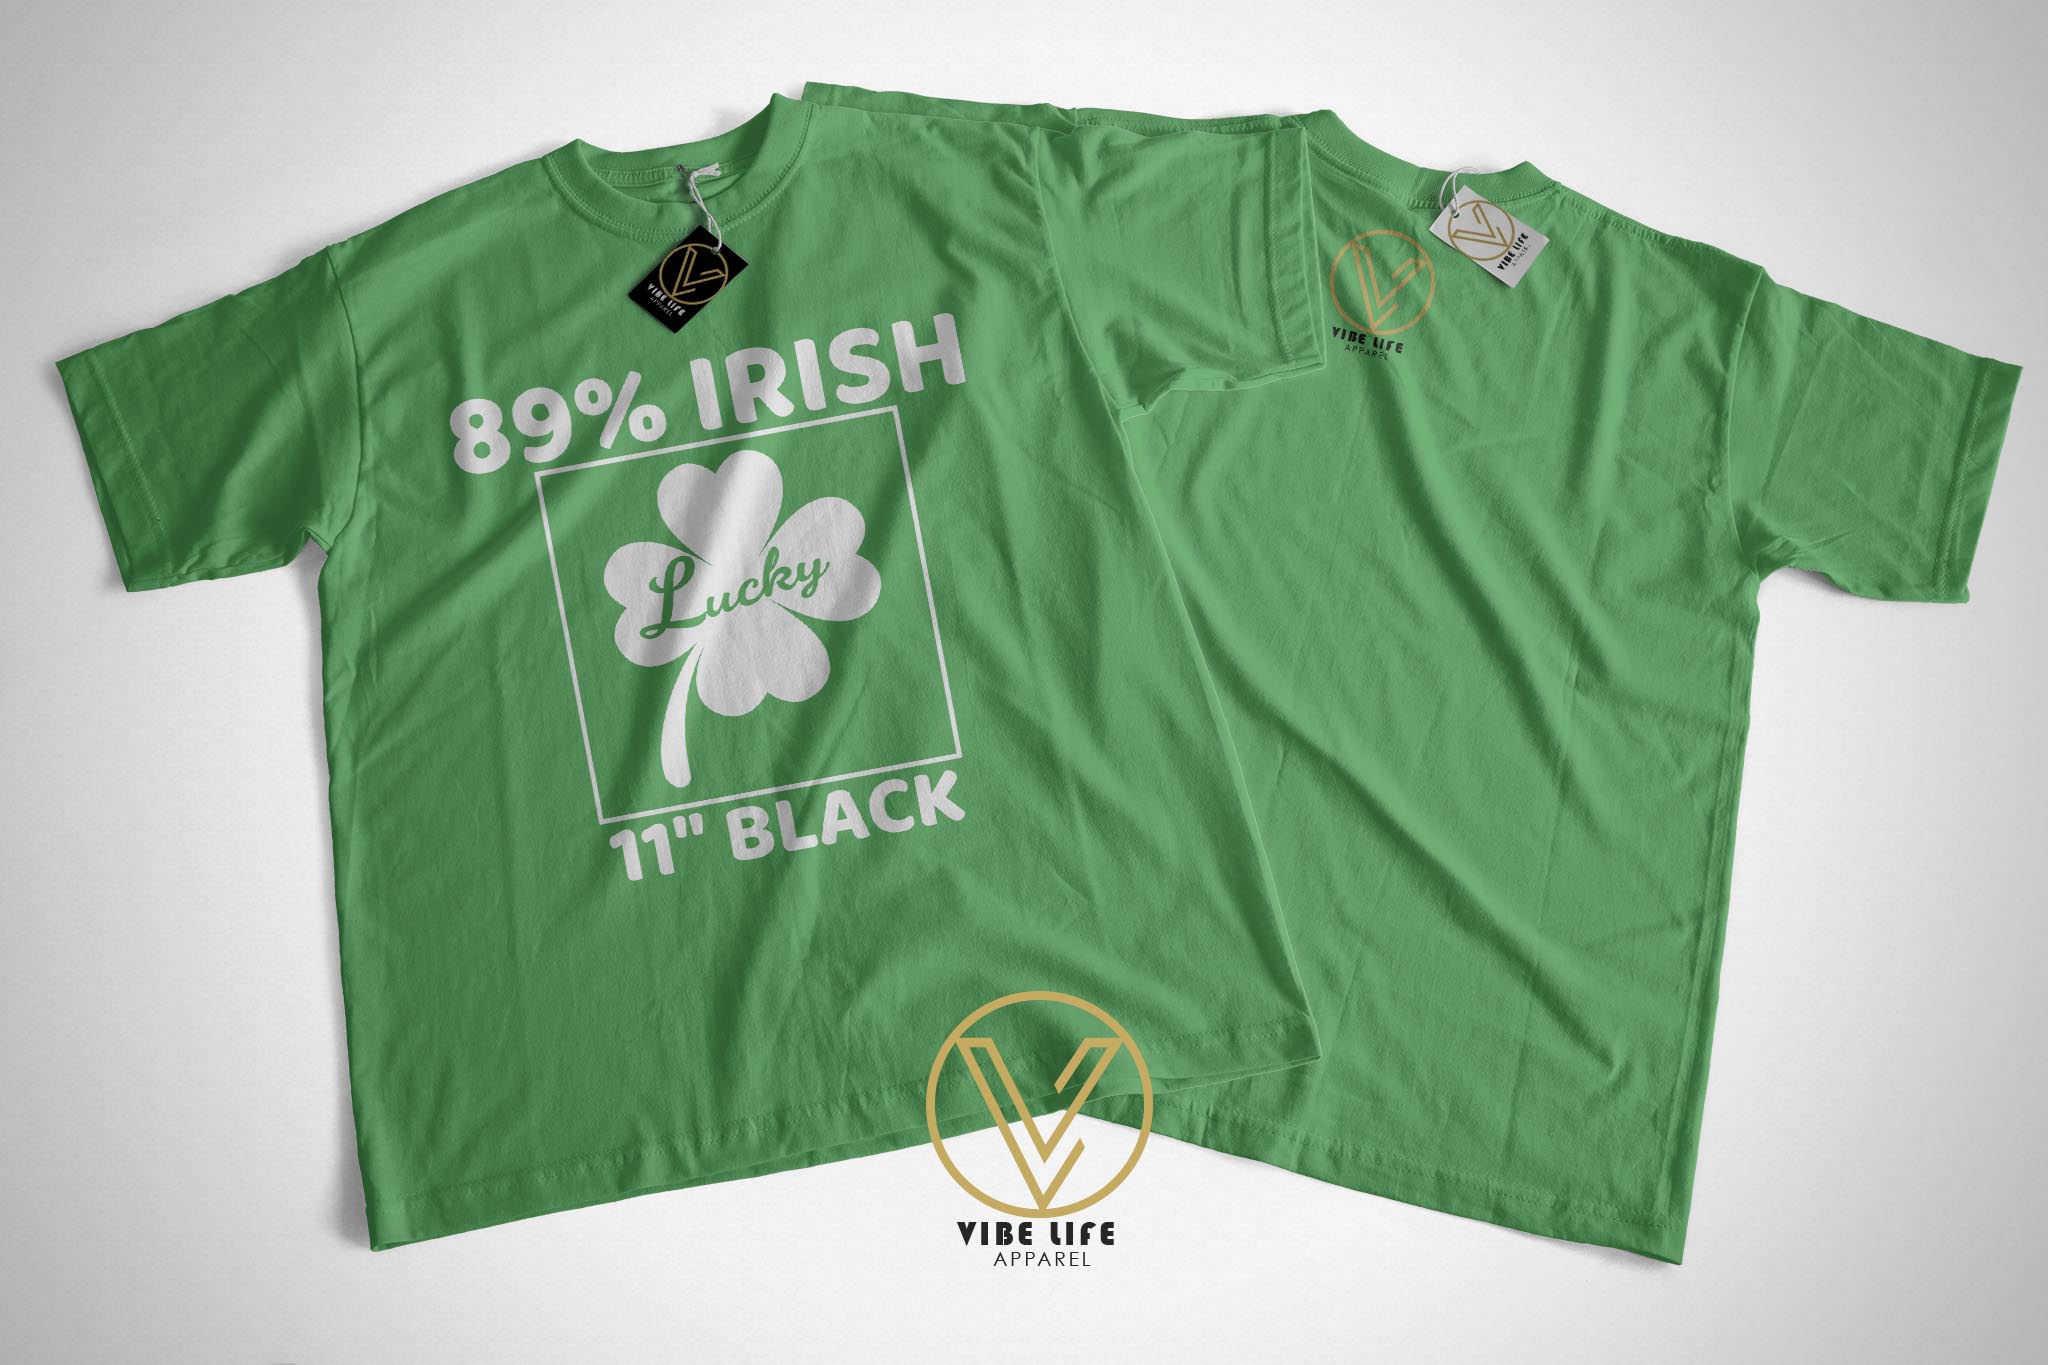 89% Irish - 11" Black - Unisex Softstyle Crewneck Tee